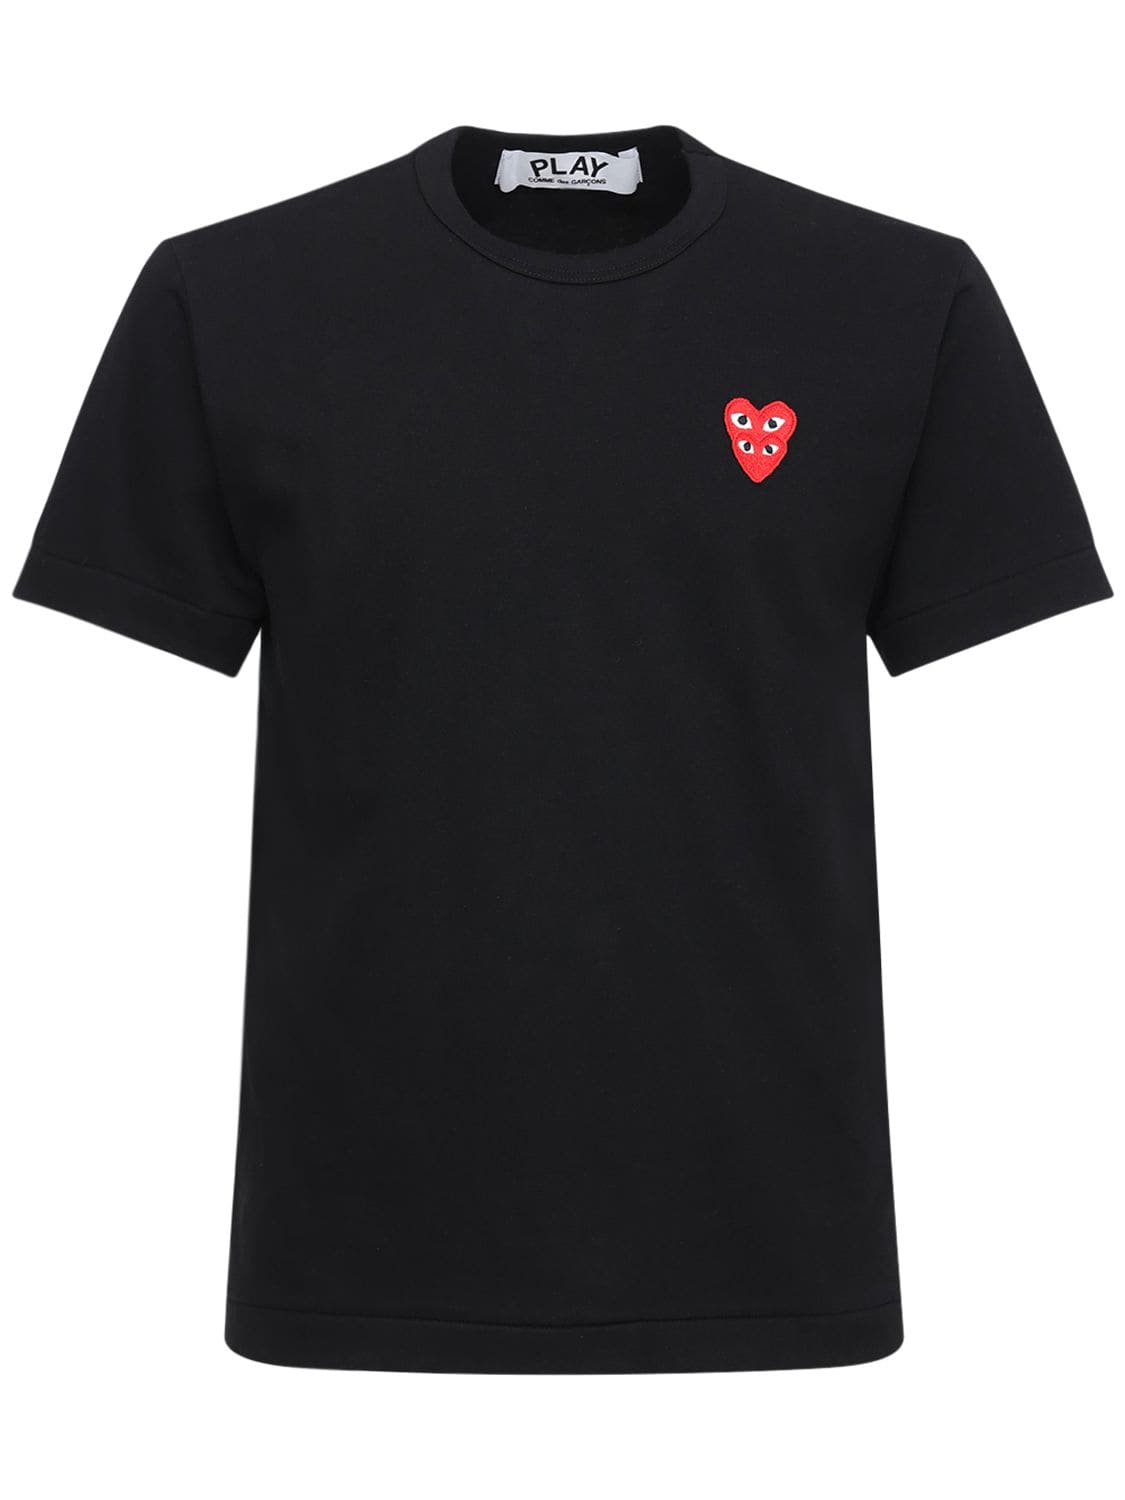 Comme Des Garçons Play Double Hearts Patch Jersey T-shirt In Black